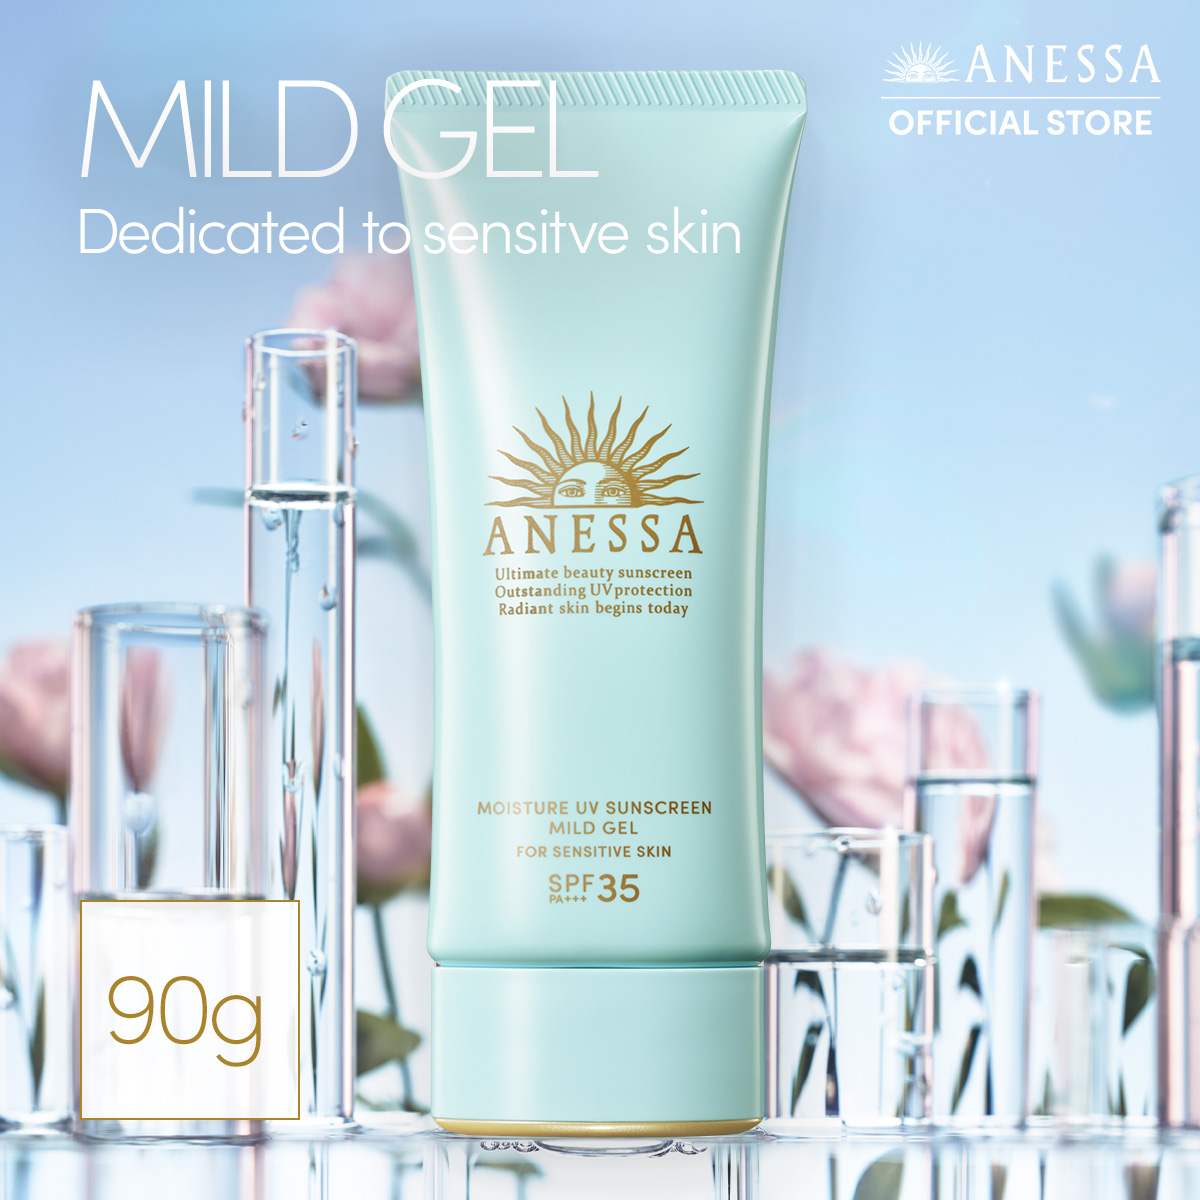 ANESSA Moisture UV Sunscreen Mild Gel N 90G | Lazada Singapore